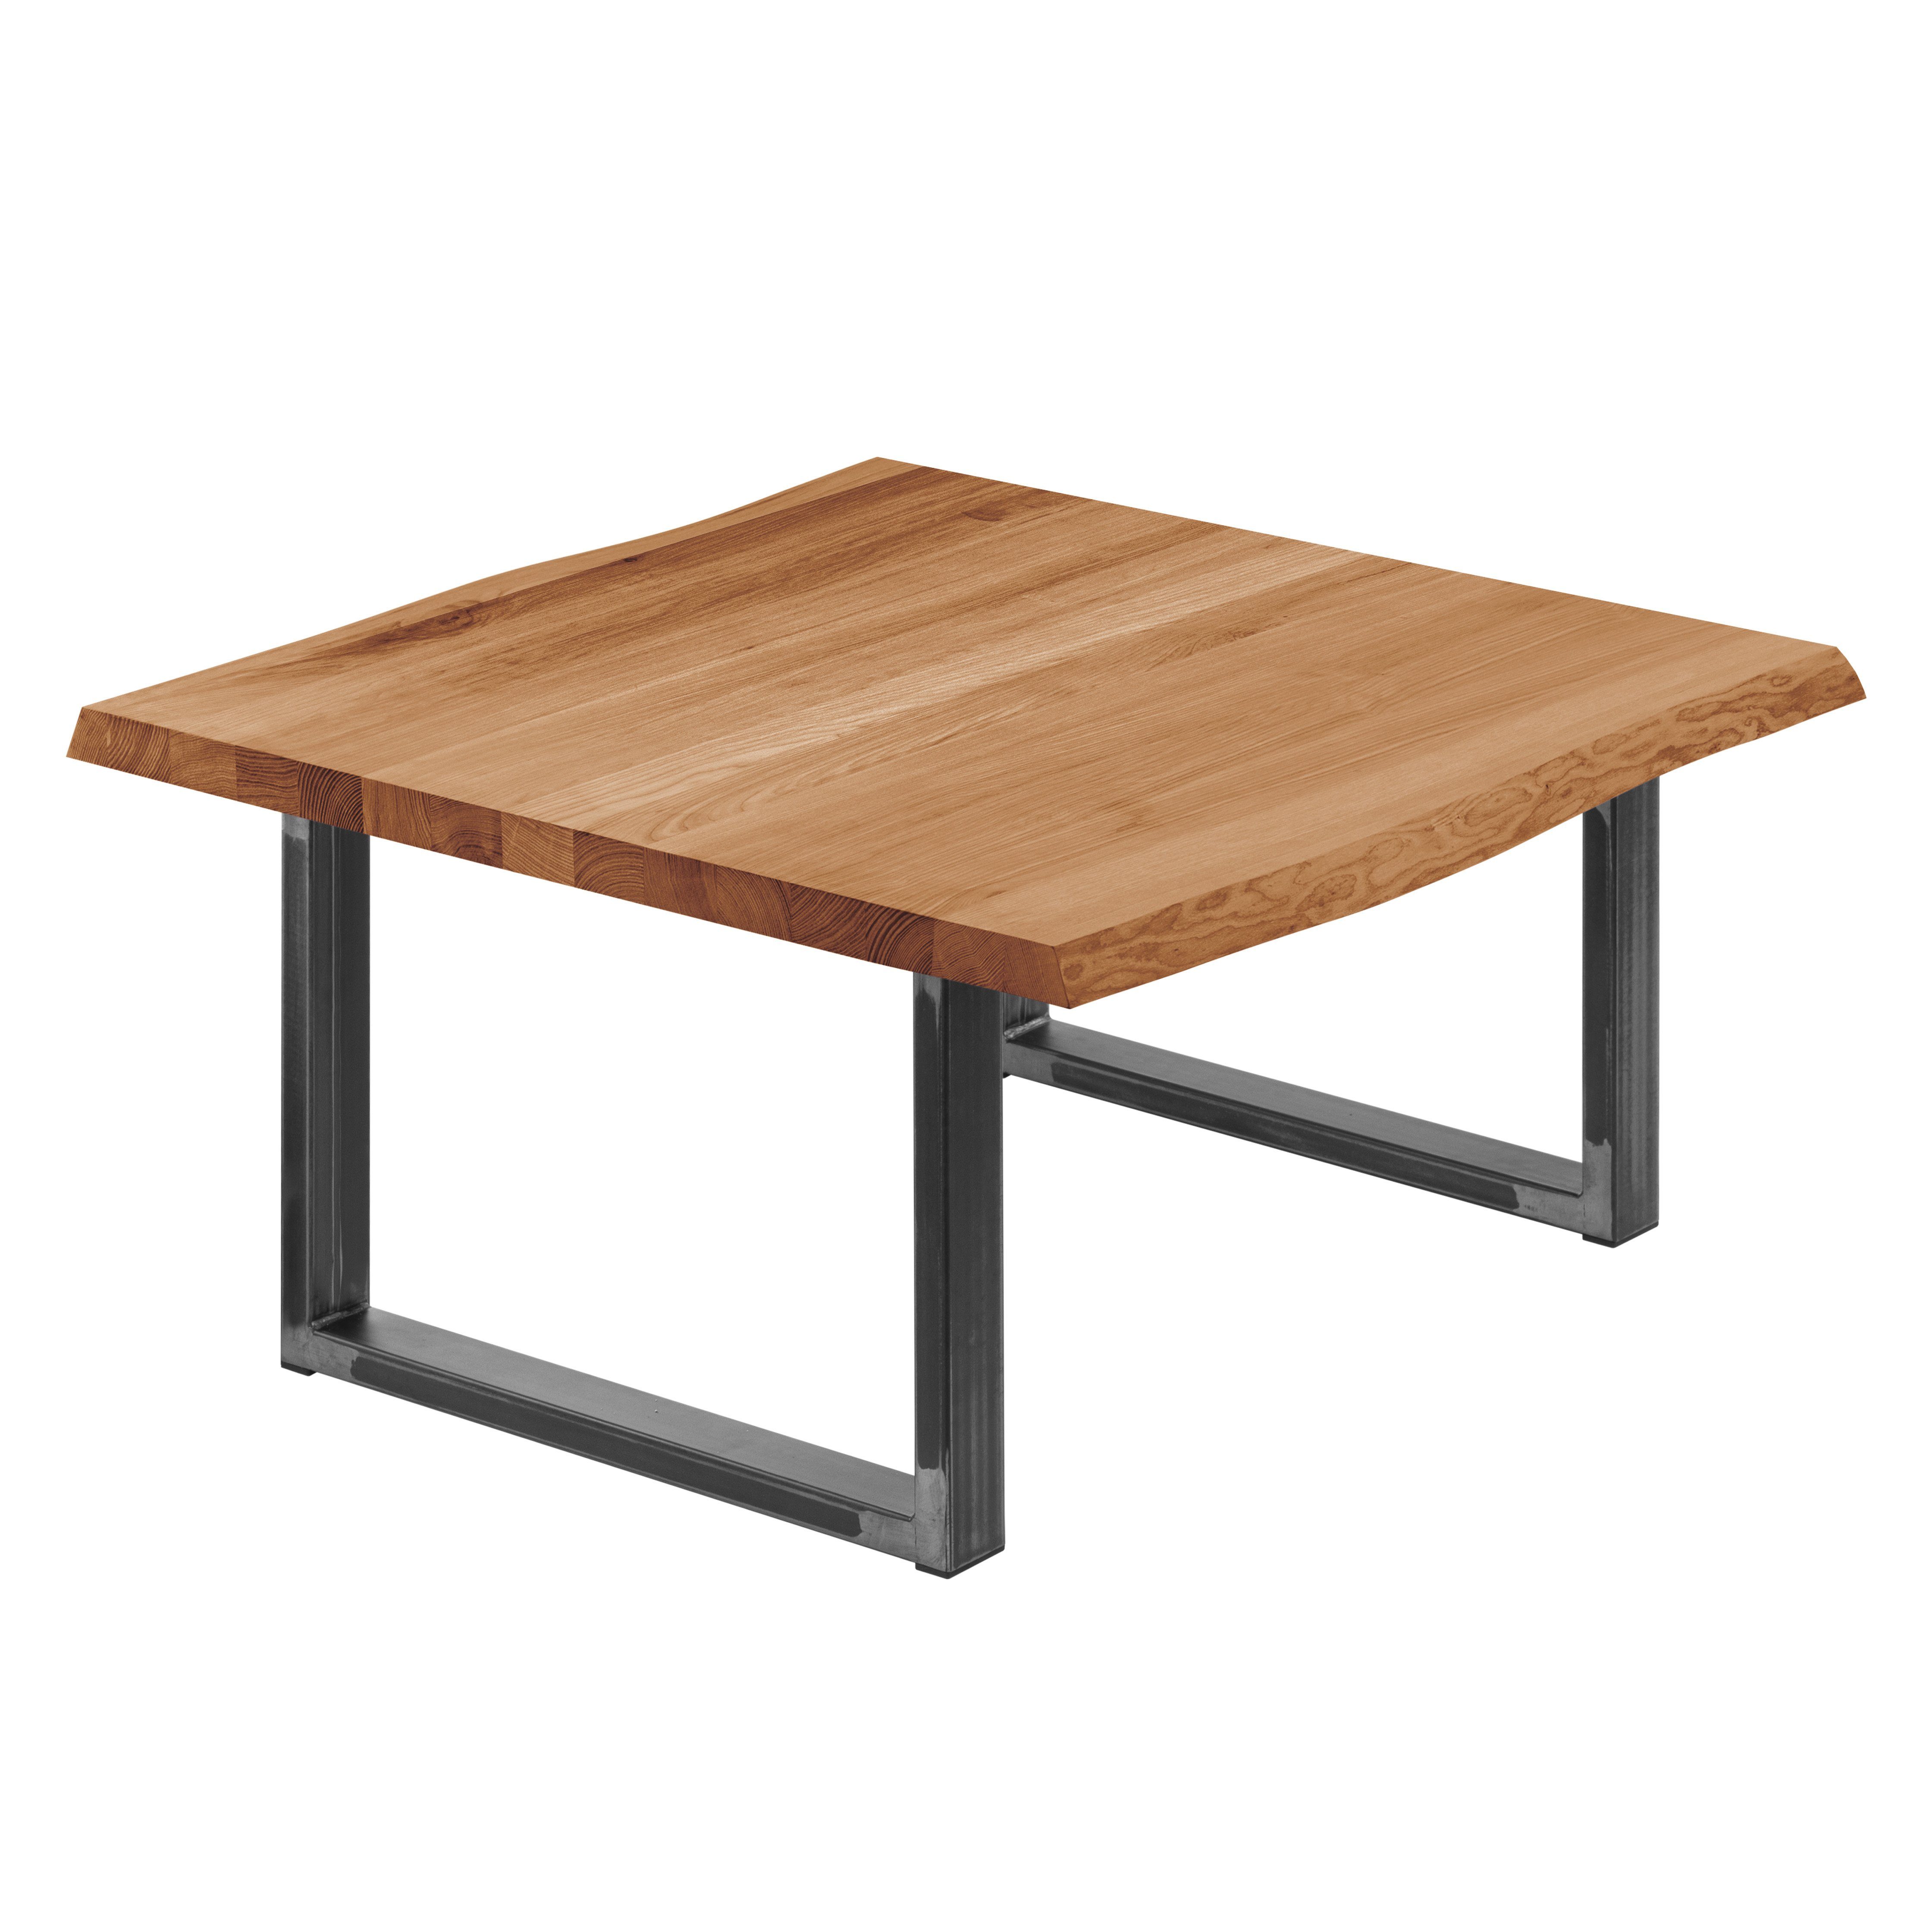 LAMO Manufaktur Baumkantentisch Loft Esstisch Massivholz inkl. Metallgestell (1 Tisch), Baumkante massiv Rohstahl mit Klarlack | Dunkel | Baumkantentische